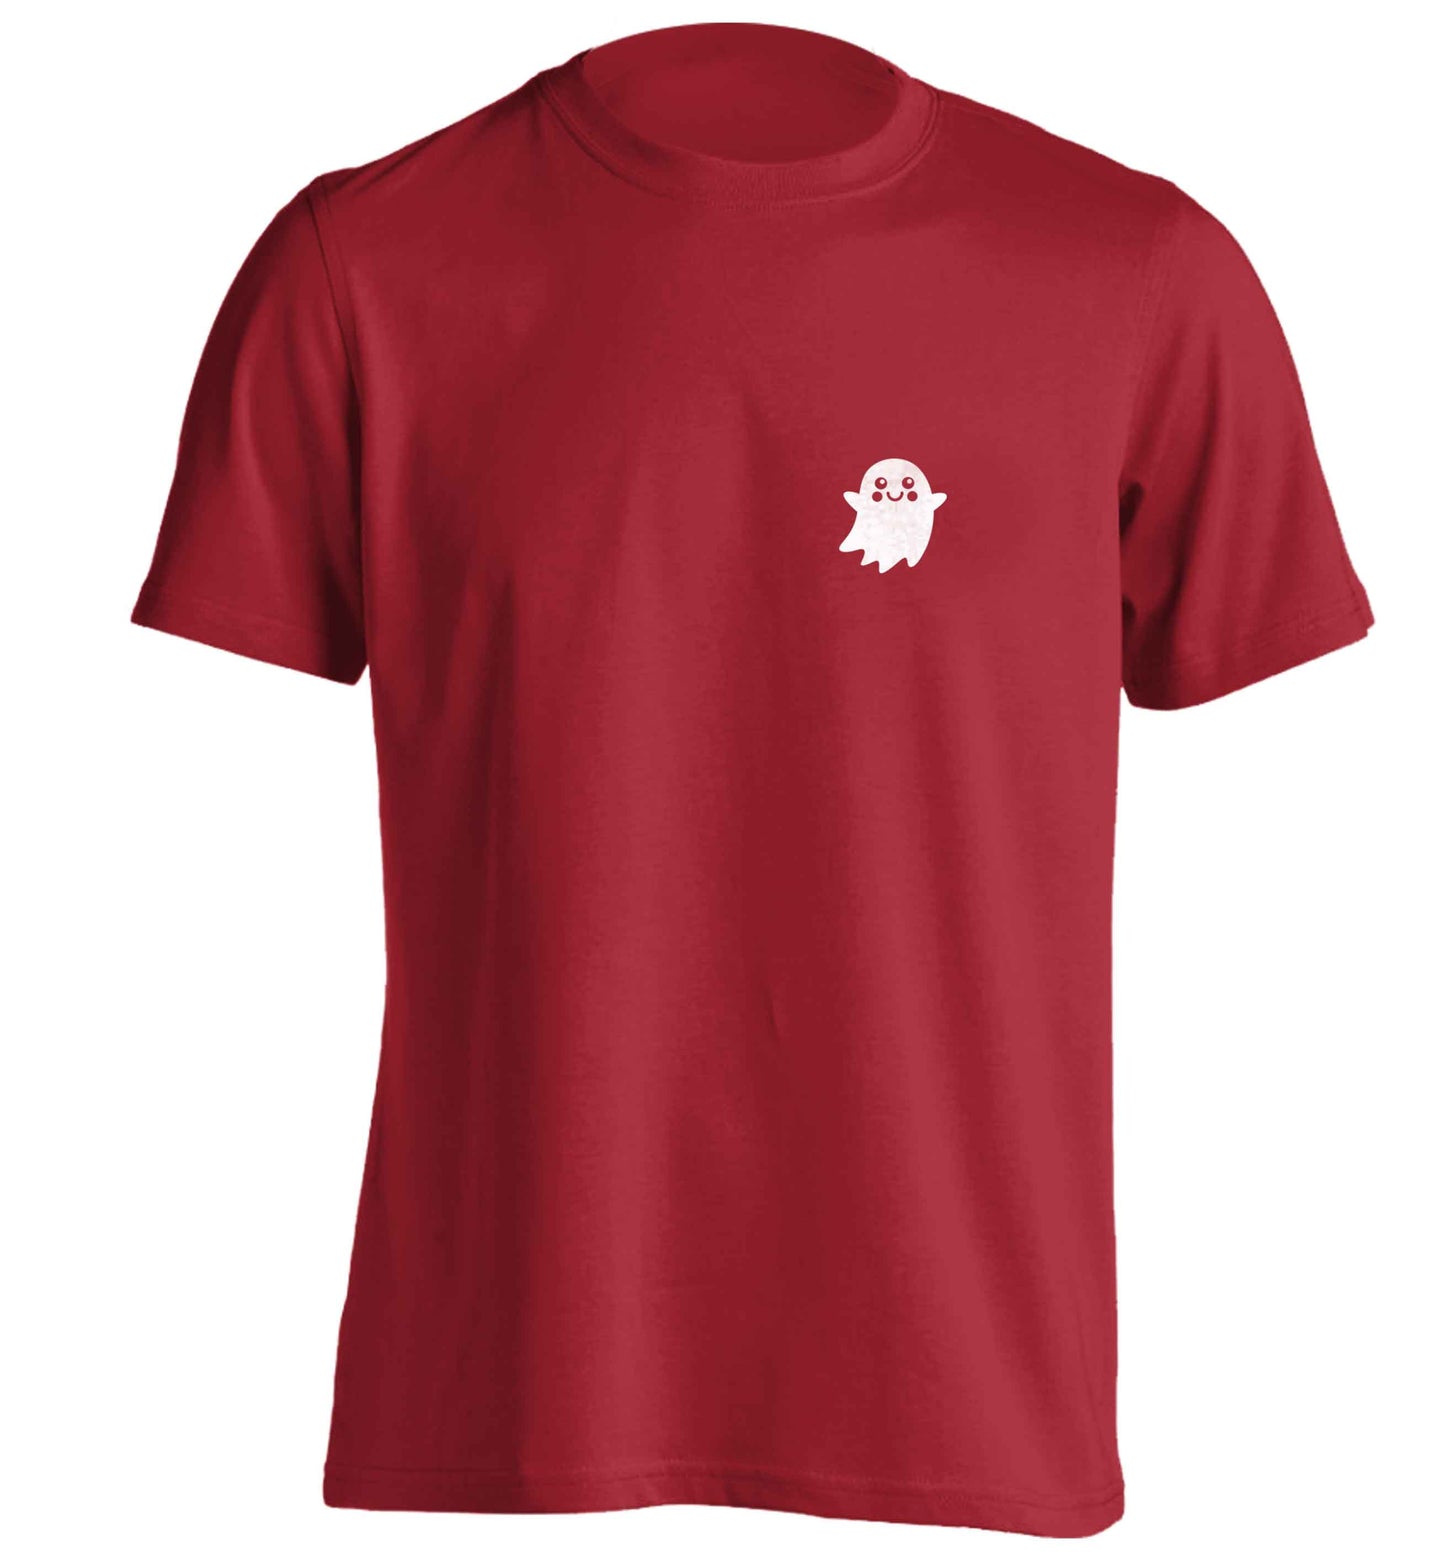 Pocket ghost adults unisex red Tshirt 2XL